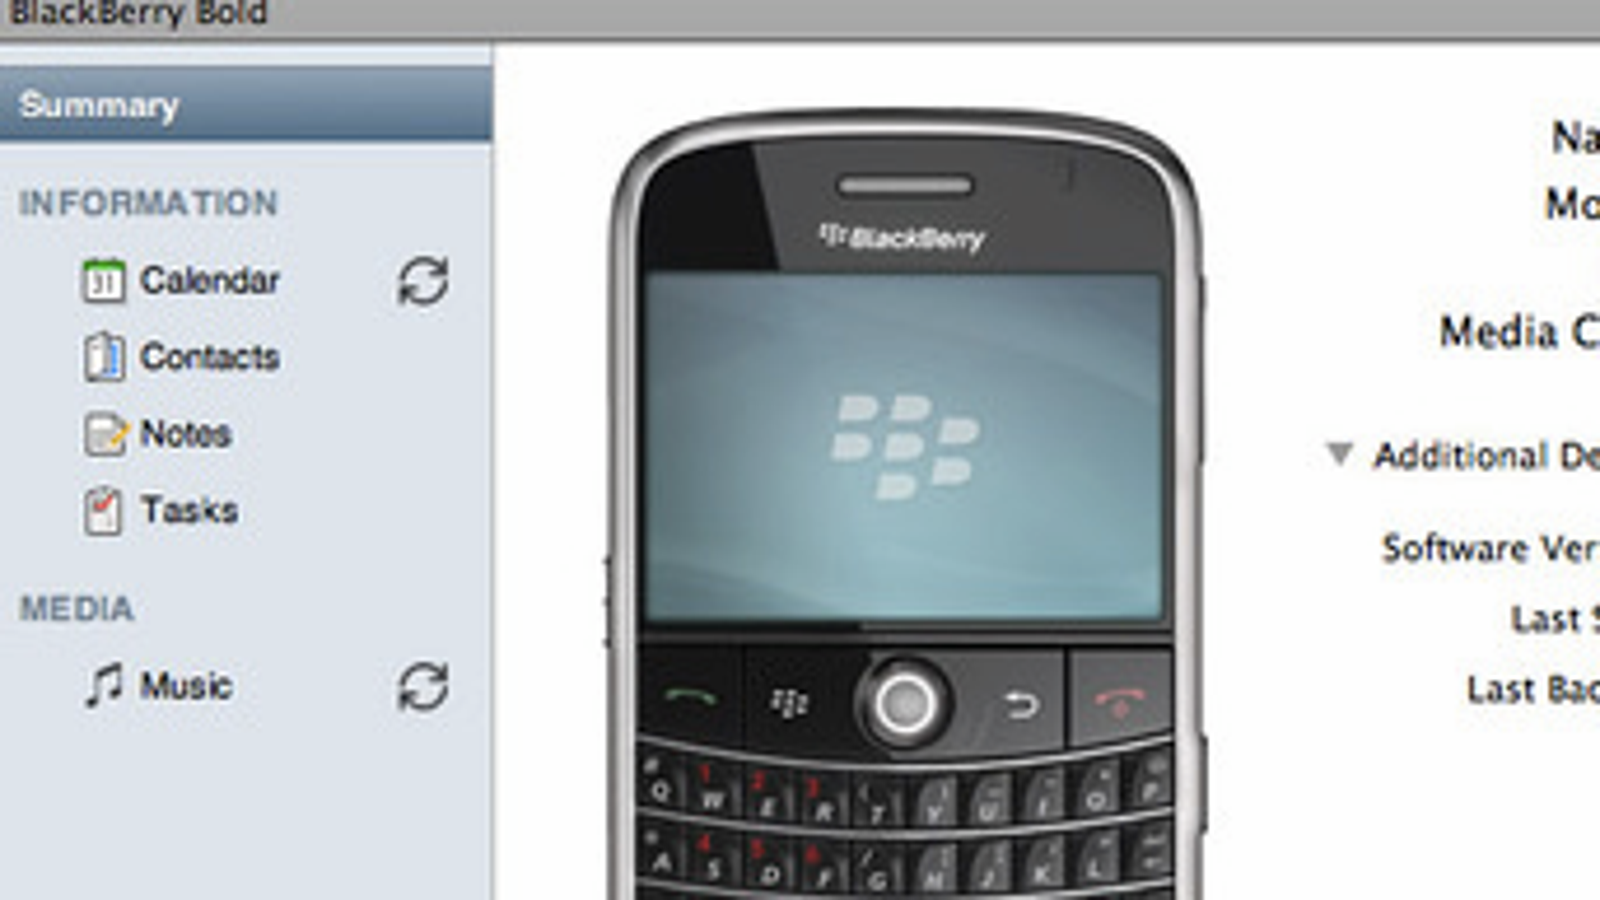 download blackberry services